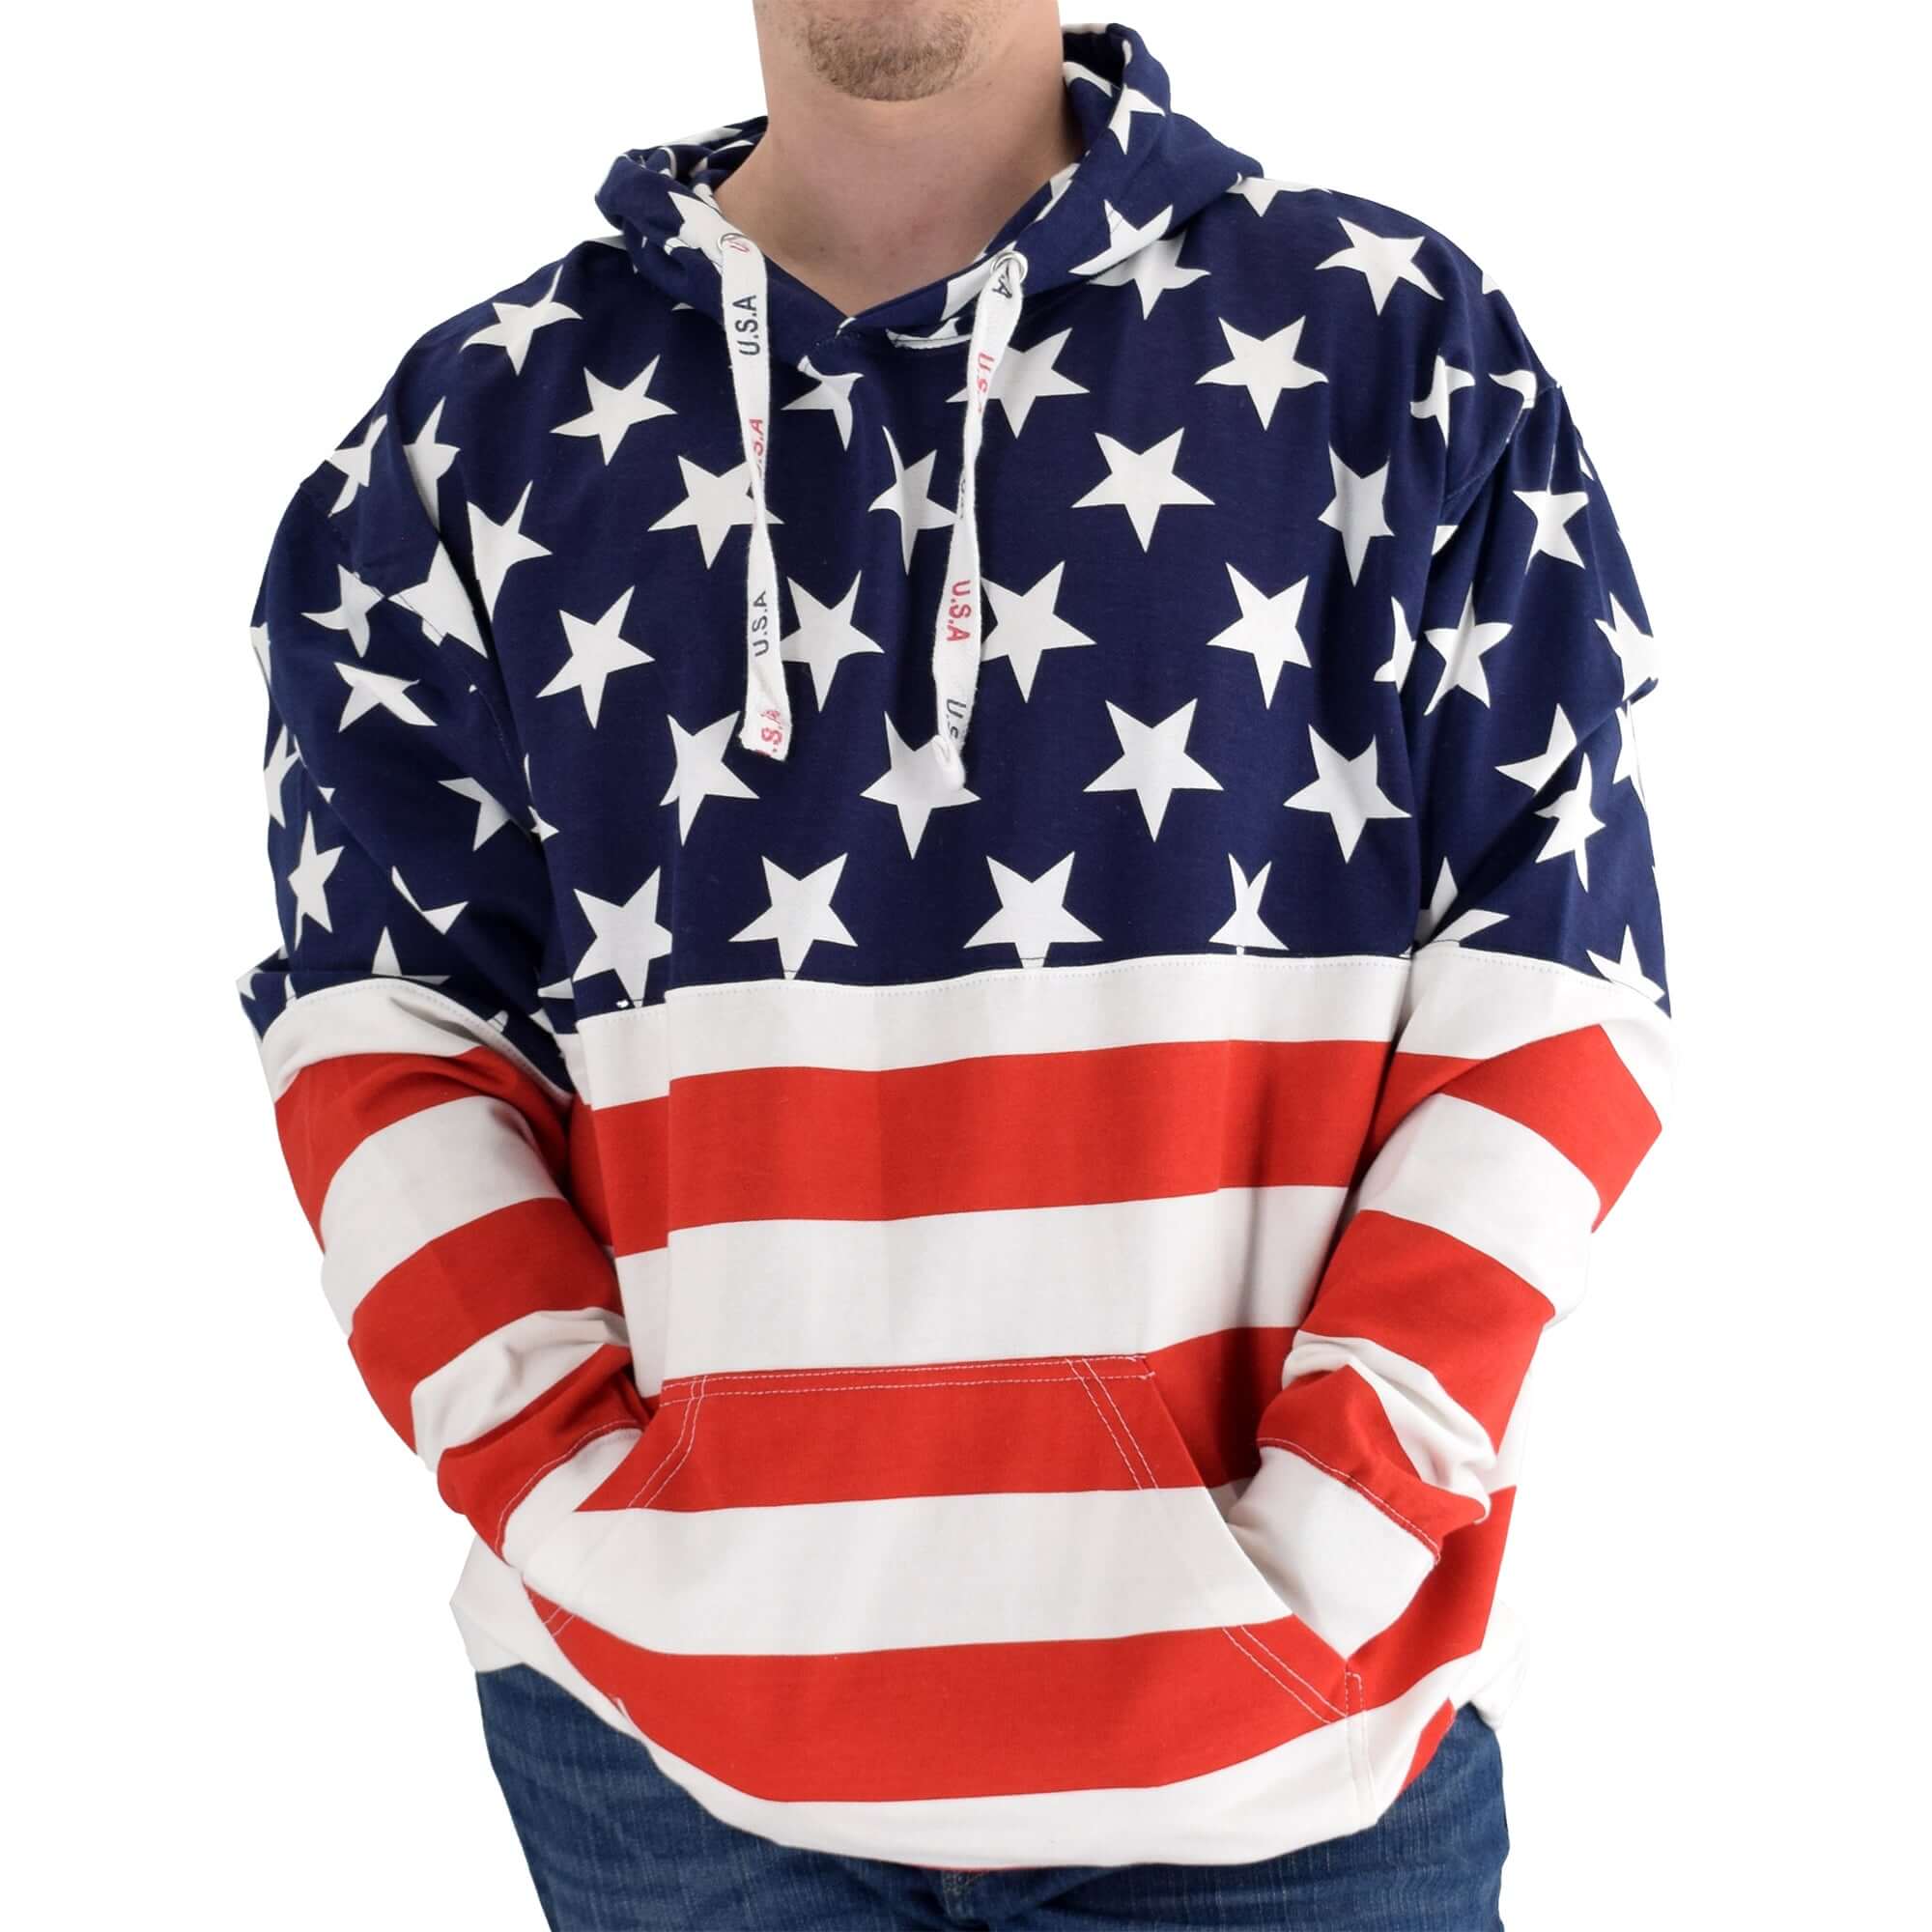 USA Patriotic American Flag Hoodie Sweatshirt Red White Blue